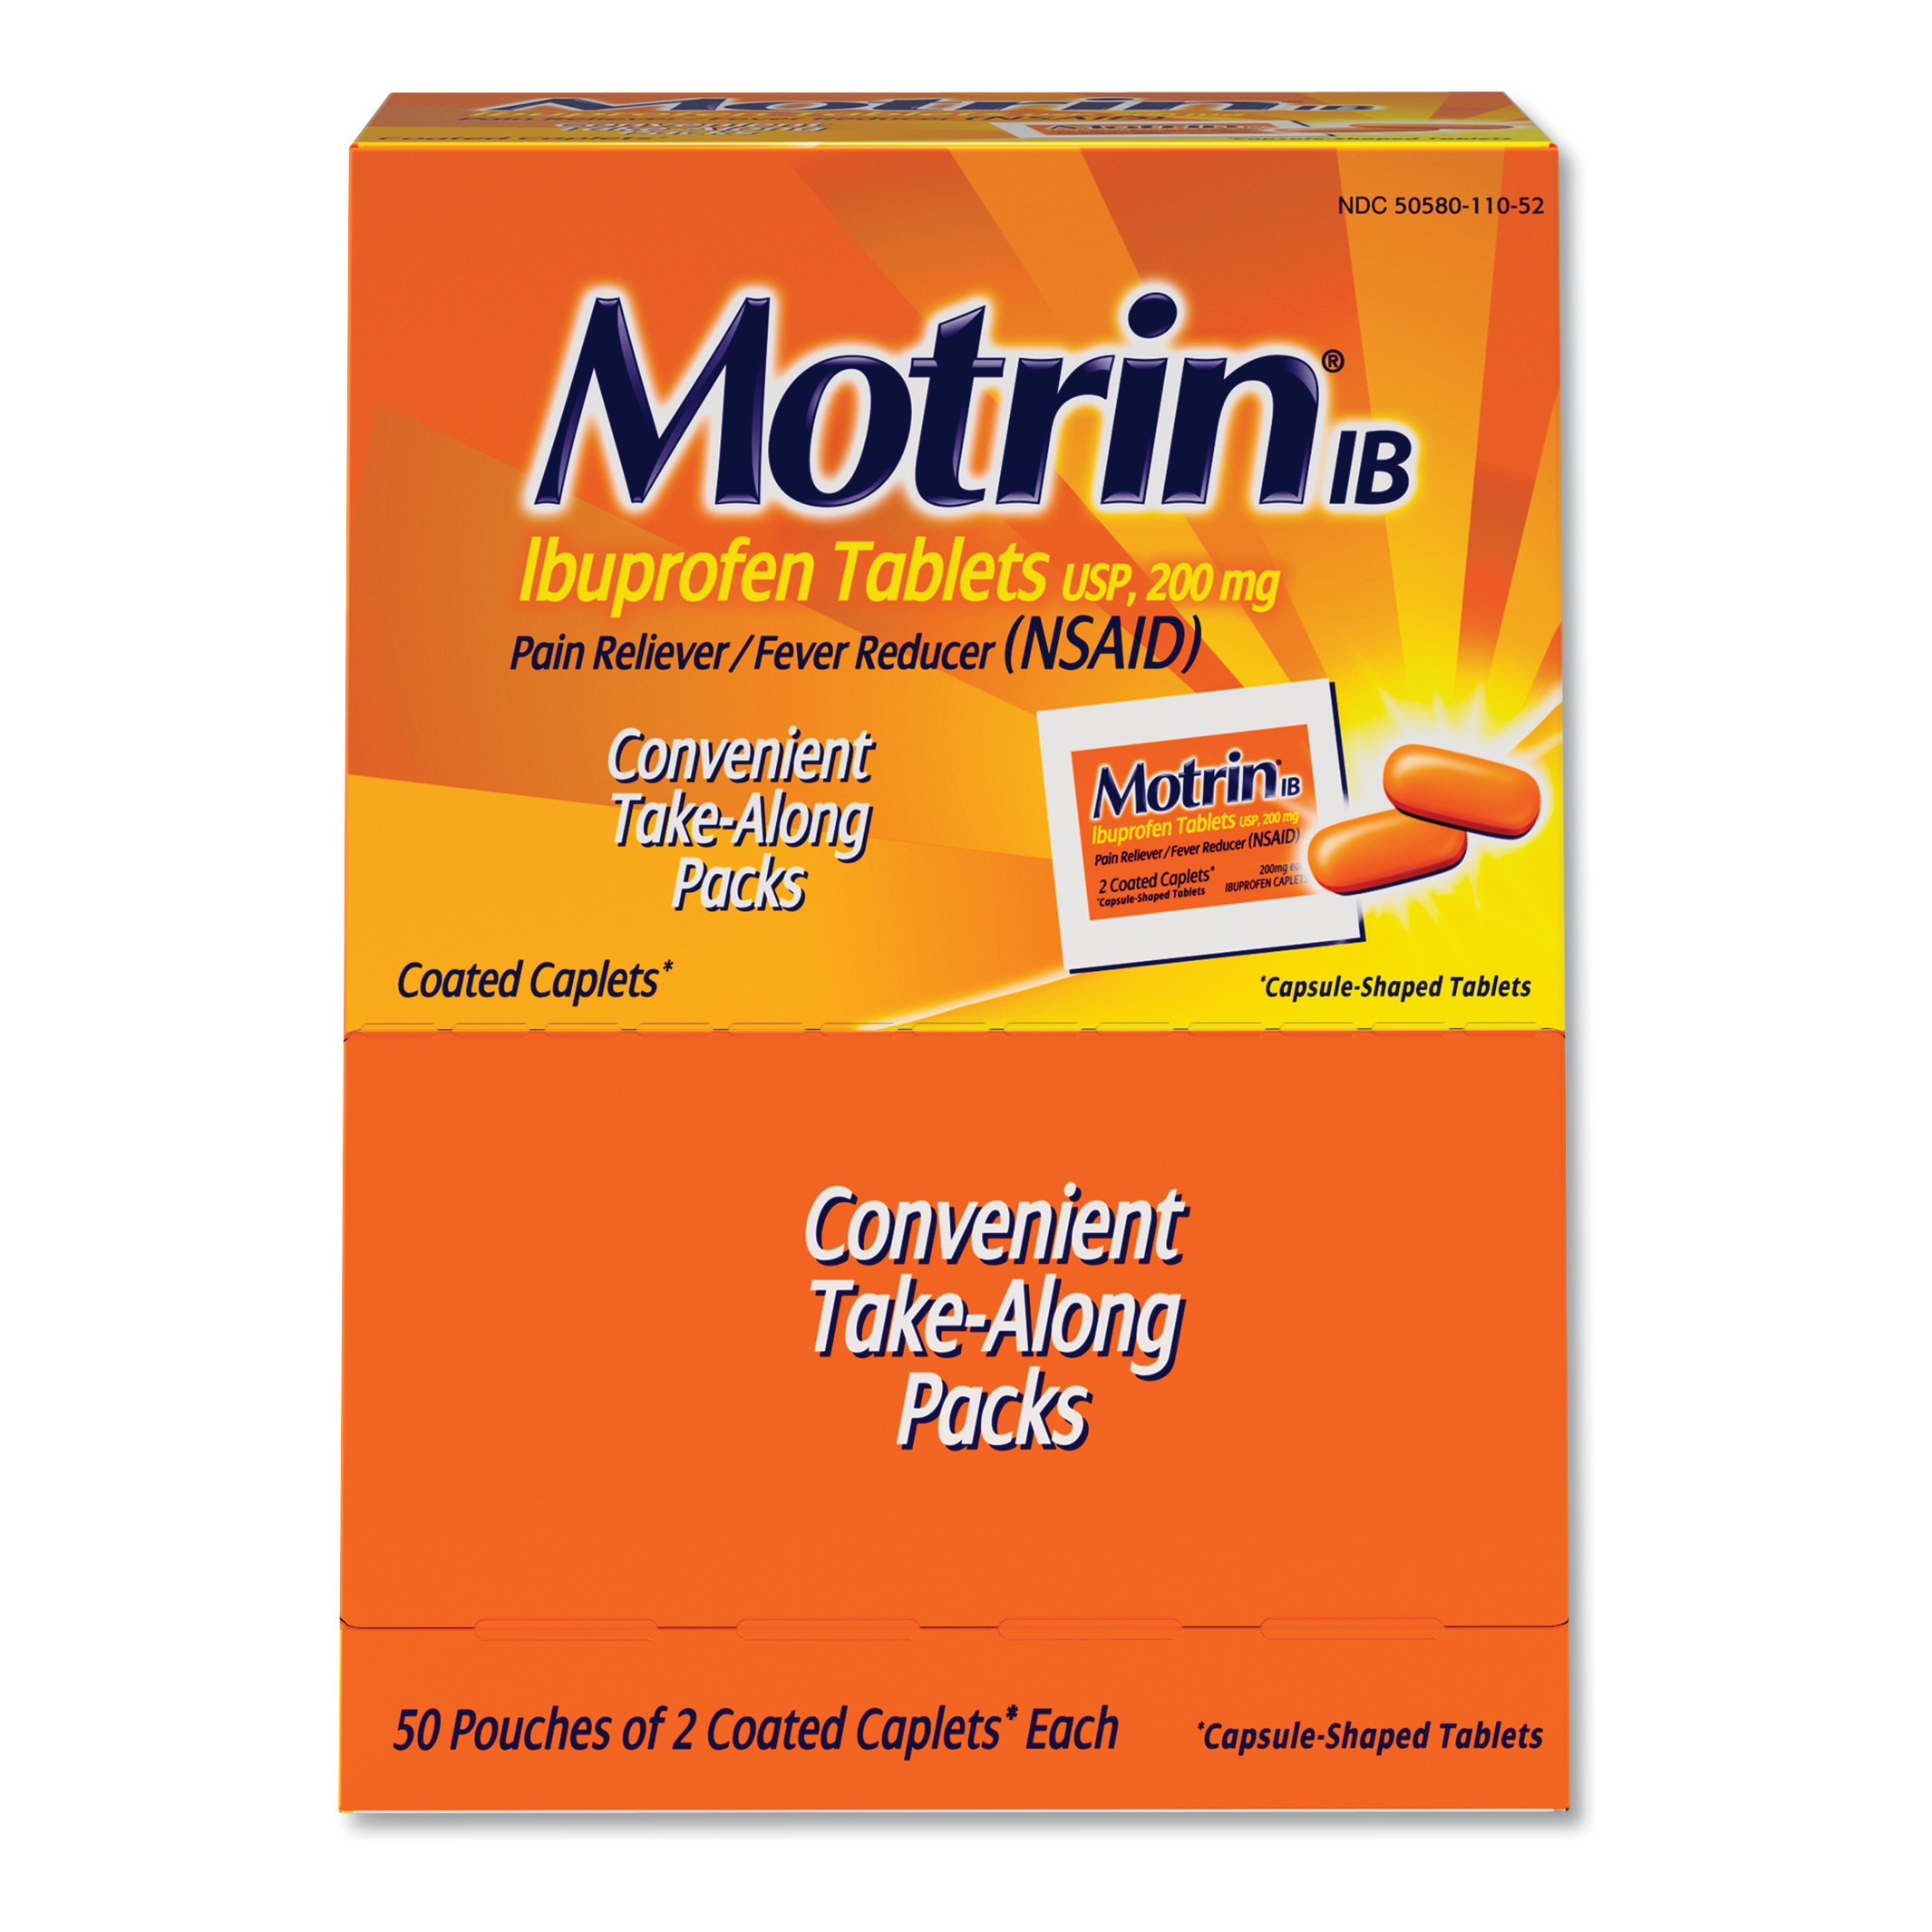  Motrin IB 48152 Ibuprofen Tablets, Two-Pack, 50 Packs/Box (MCL48152) 